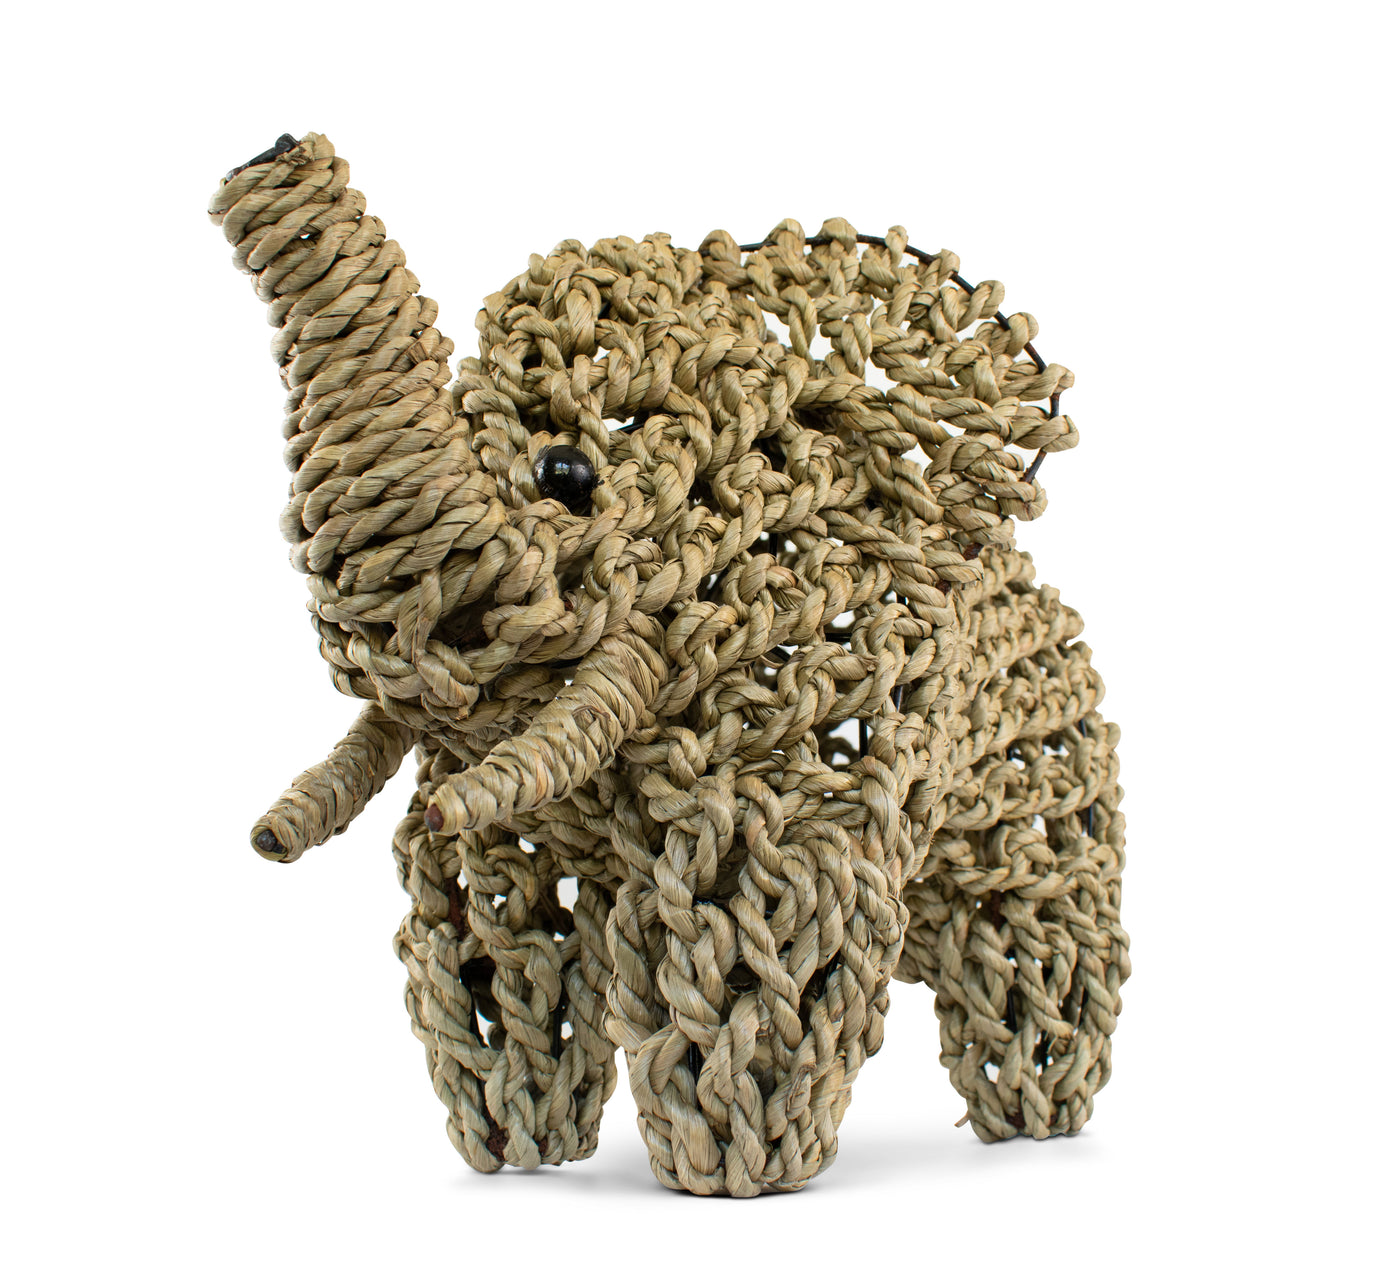 Hand Woven Seagrass Elephant Statue Sculpture Figurine Home Decor Decorative Handmade Handcrafted Gift Art Decoration Artwork